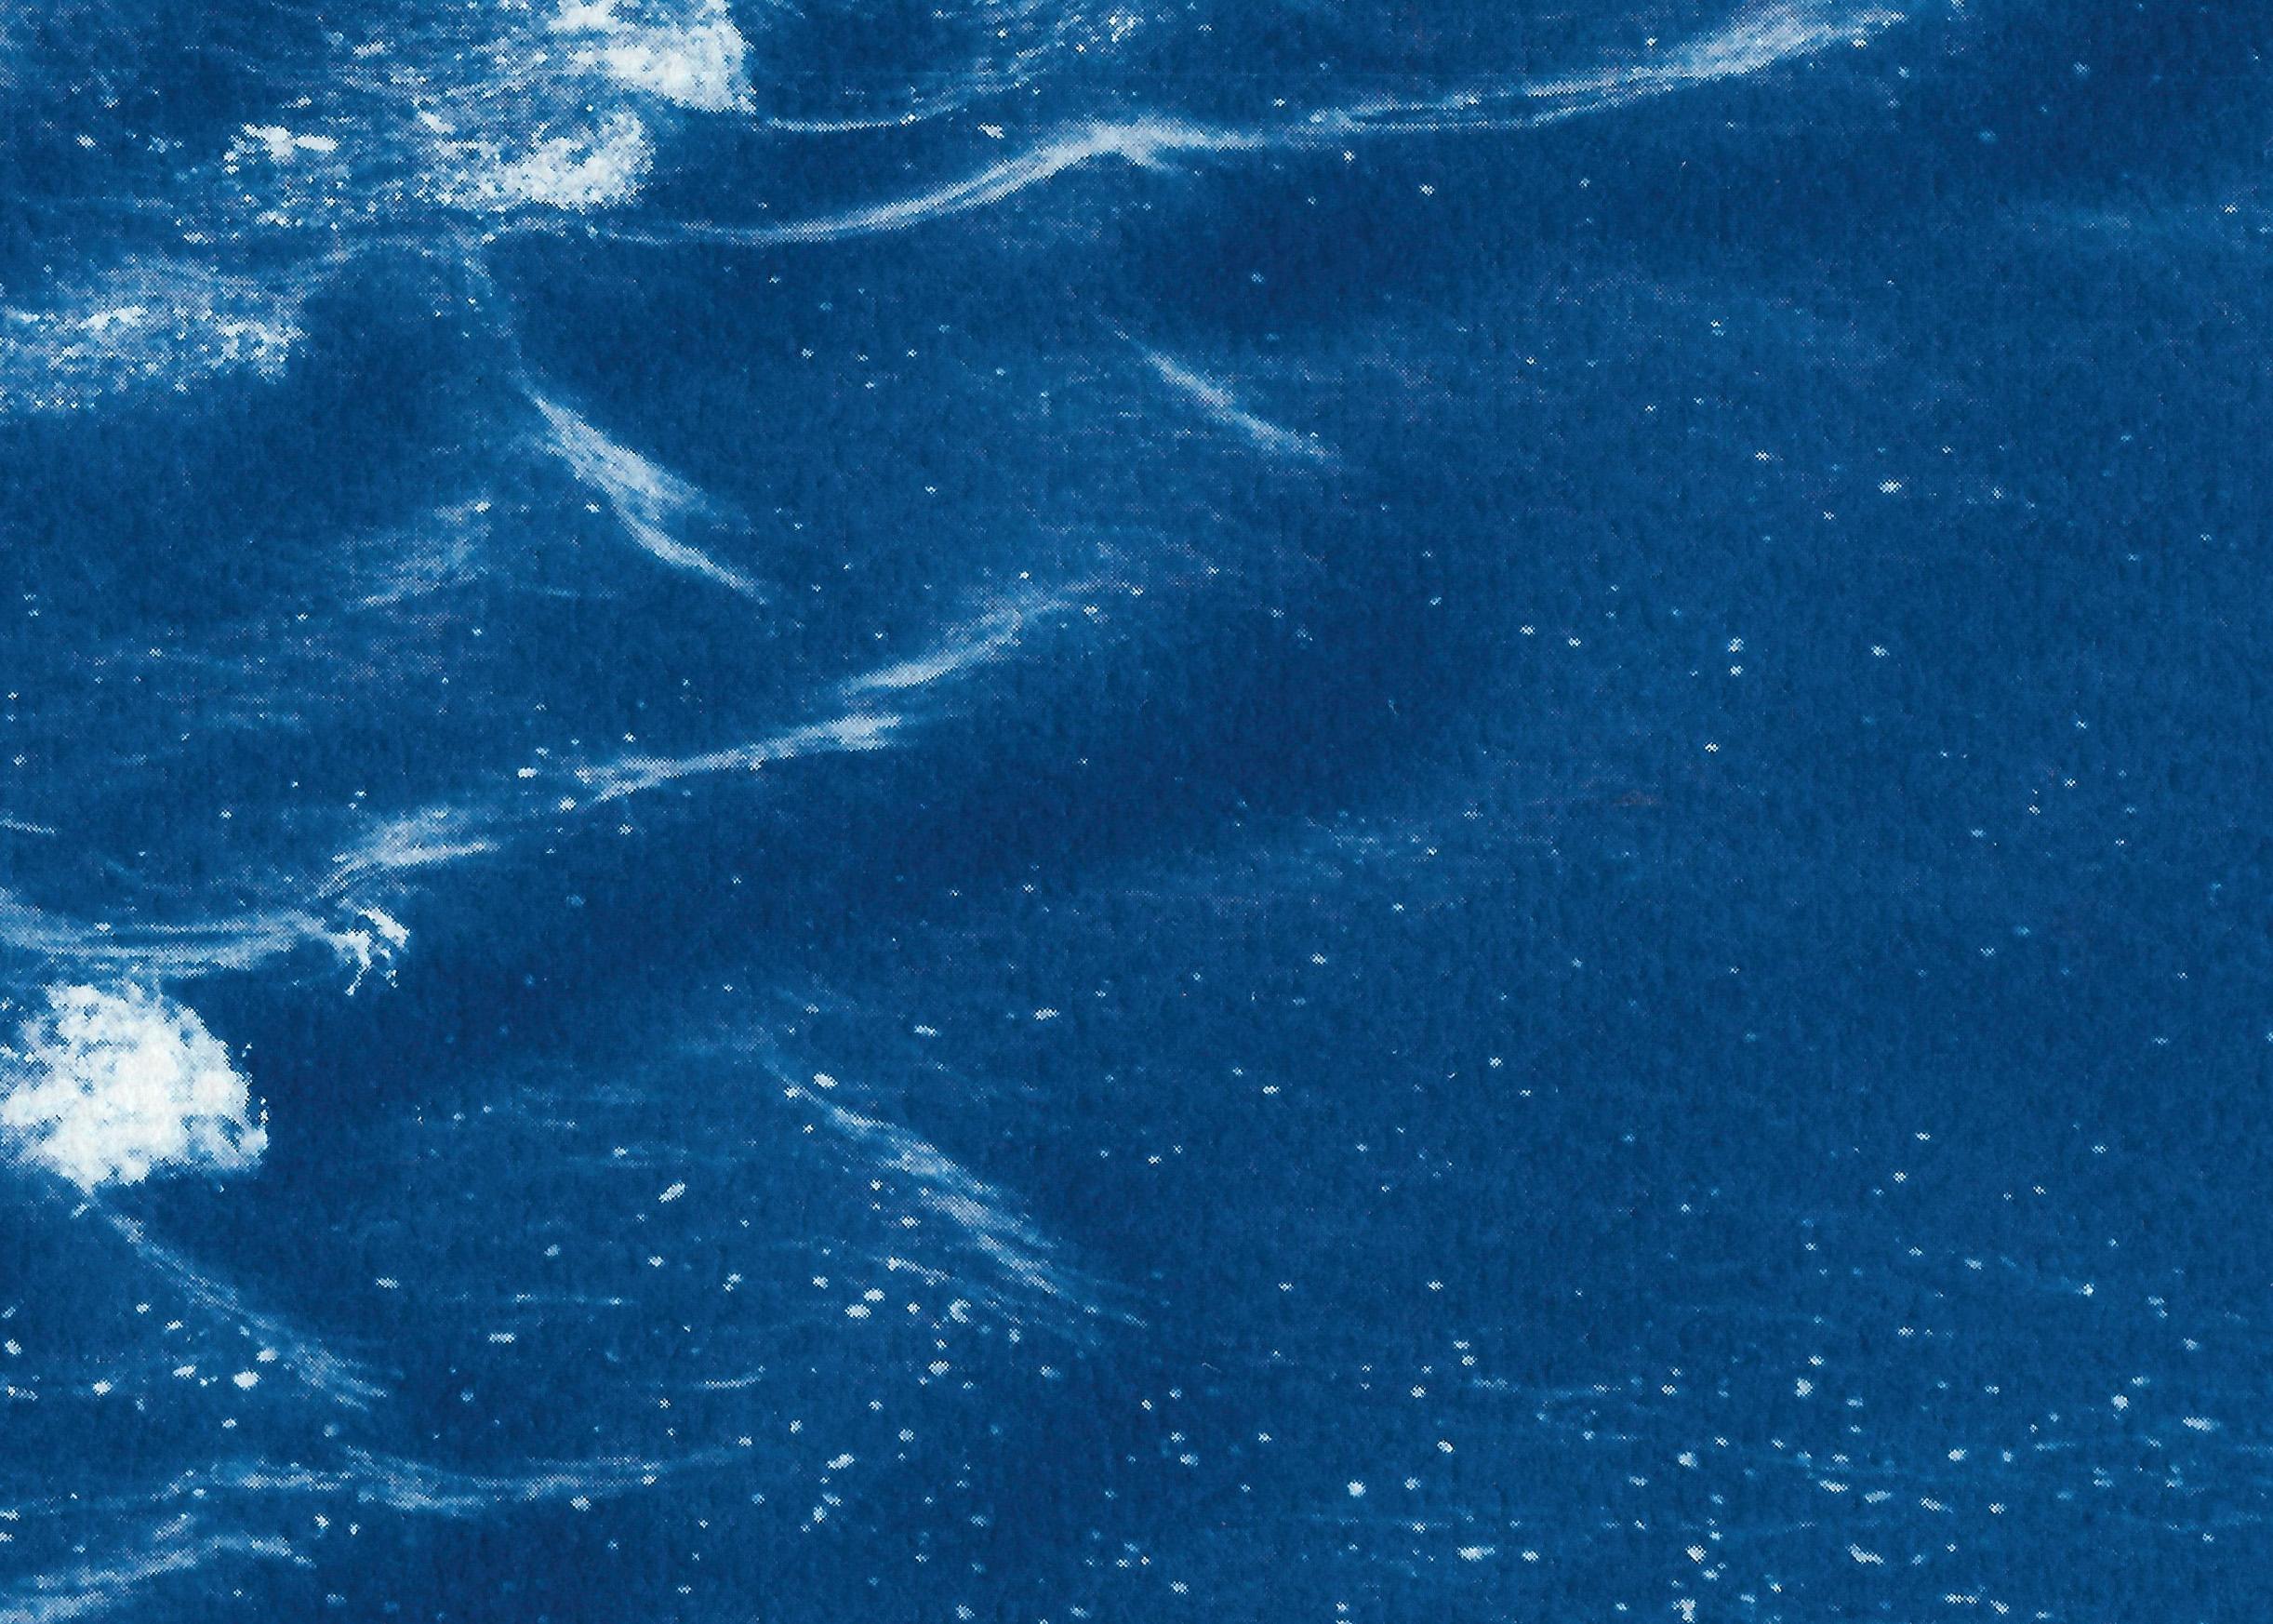 Rolling Waves off Sidney, Seascape Diptych Cyanotype, Australian Coast, Indigo 3